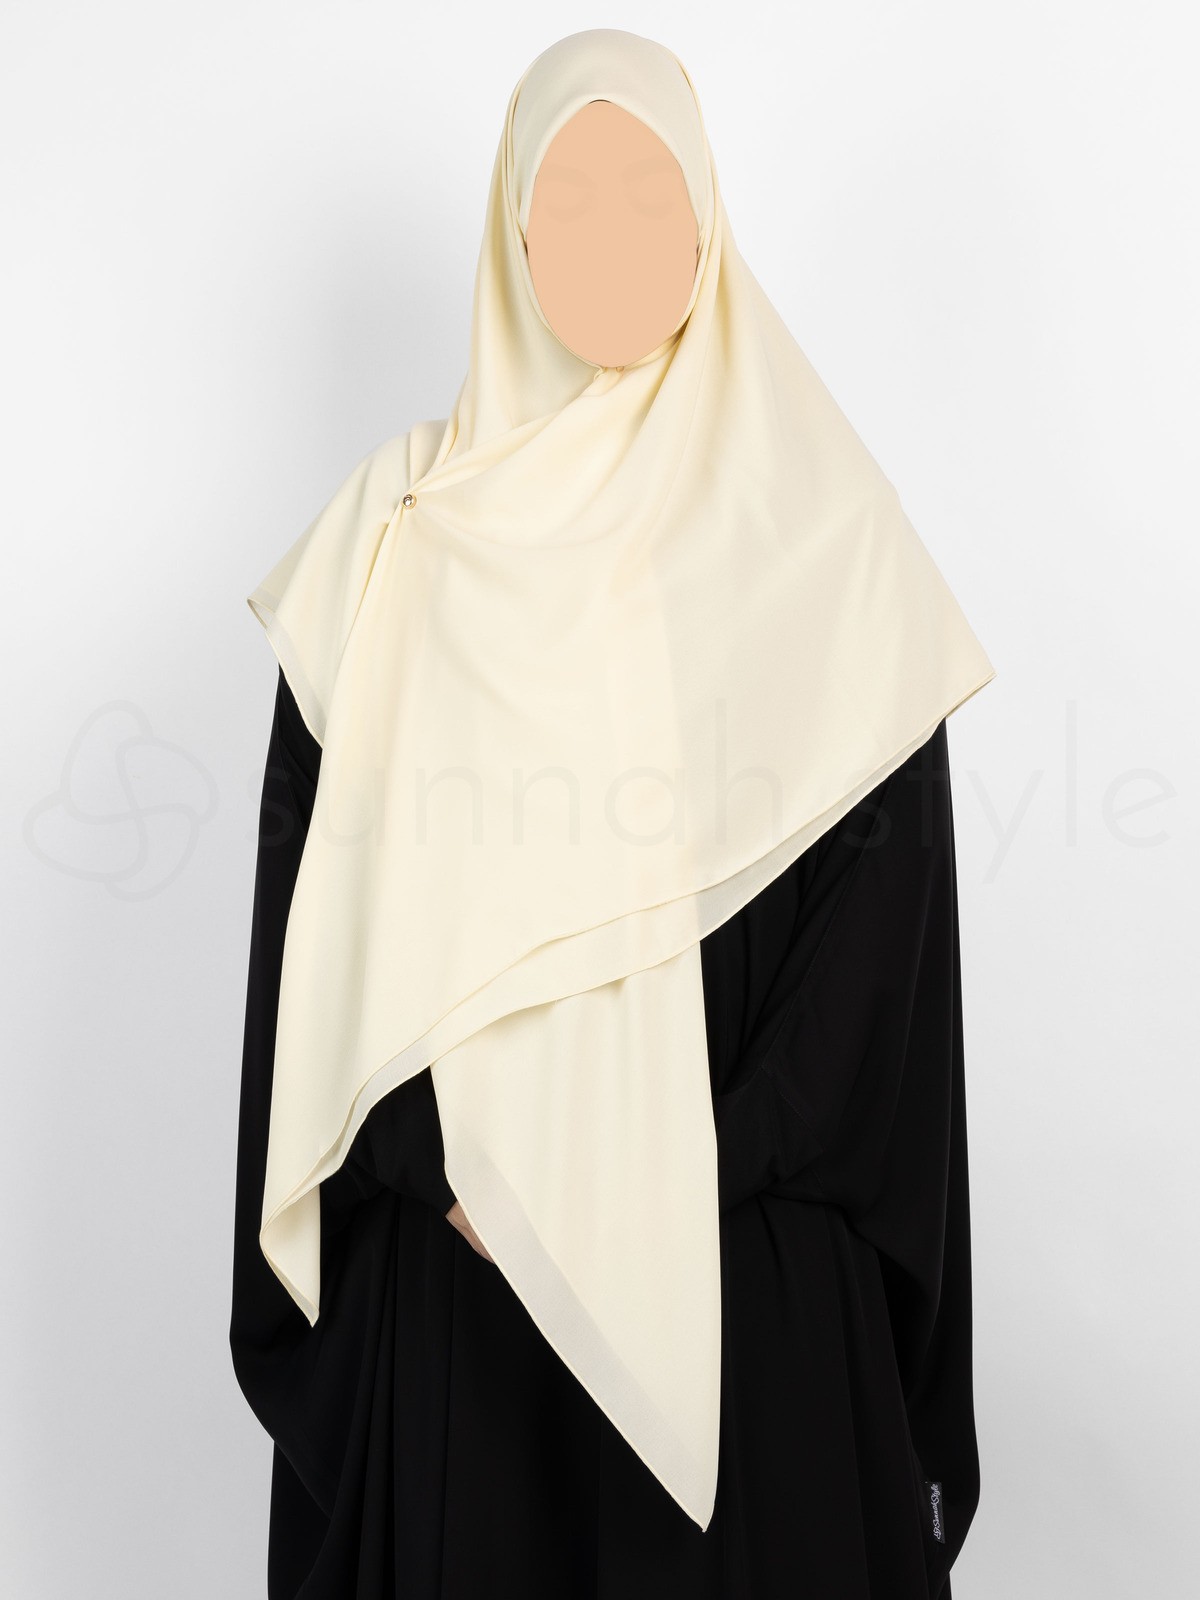 Sunnah Style Essentials Square Hijab - Large (Vanilla Cream)